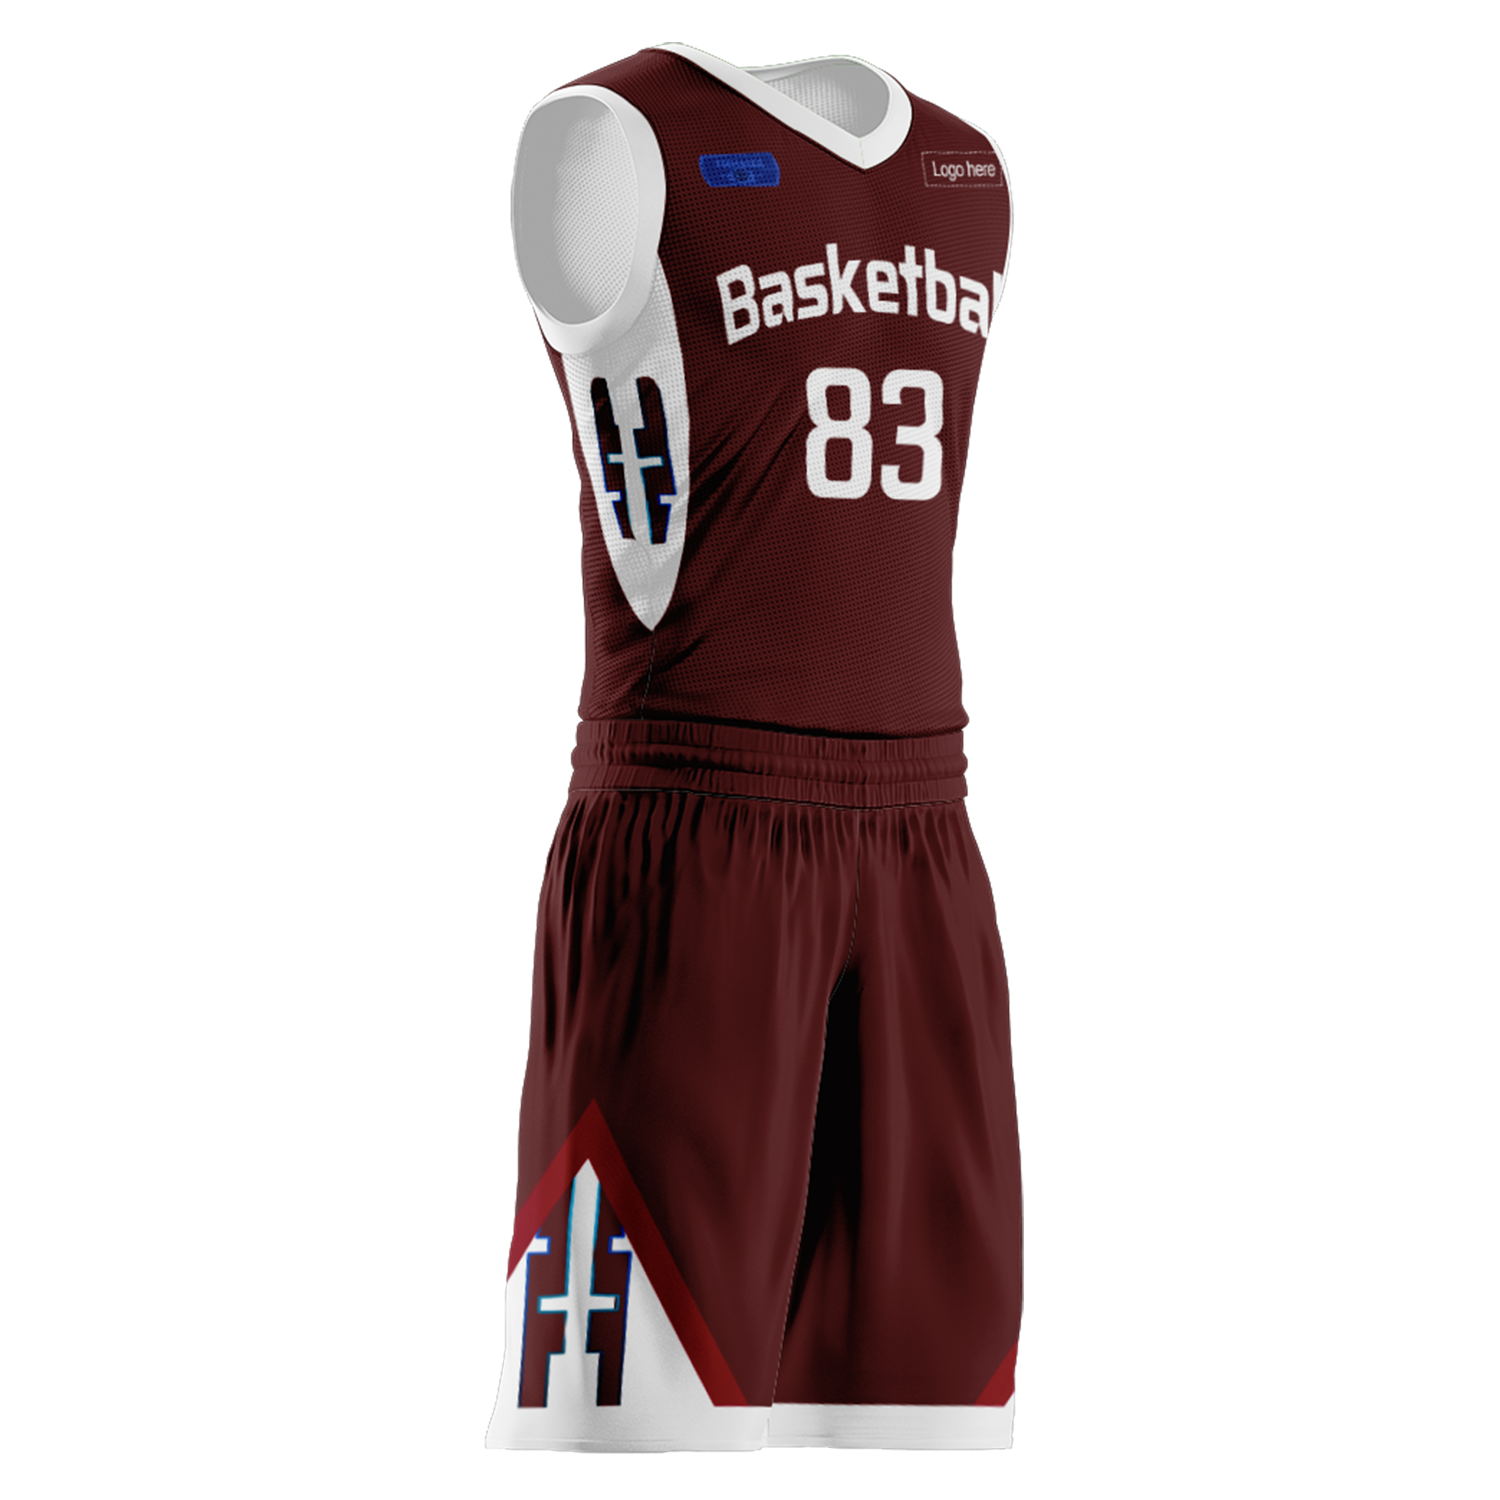 Custom Qatar Team Basketball Suits